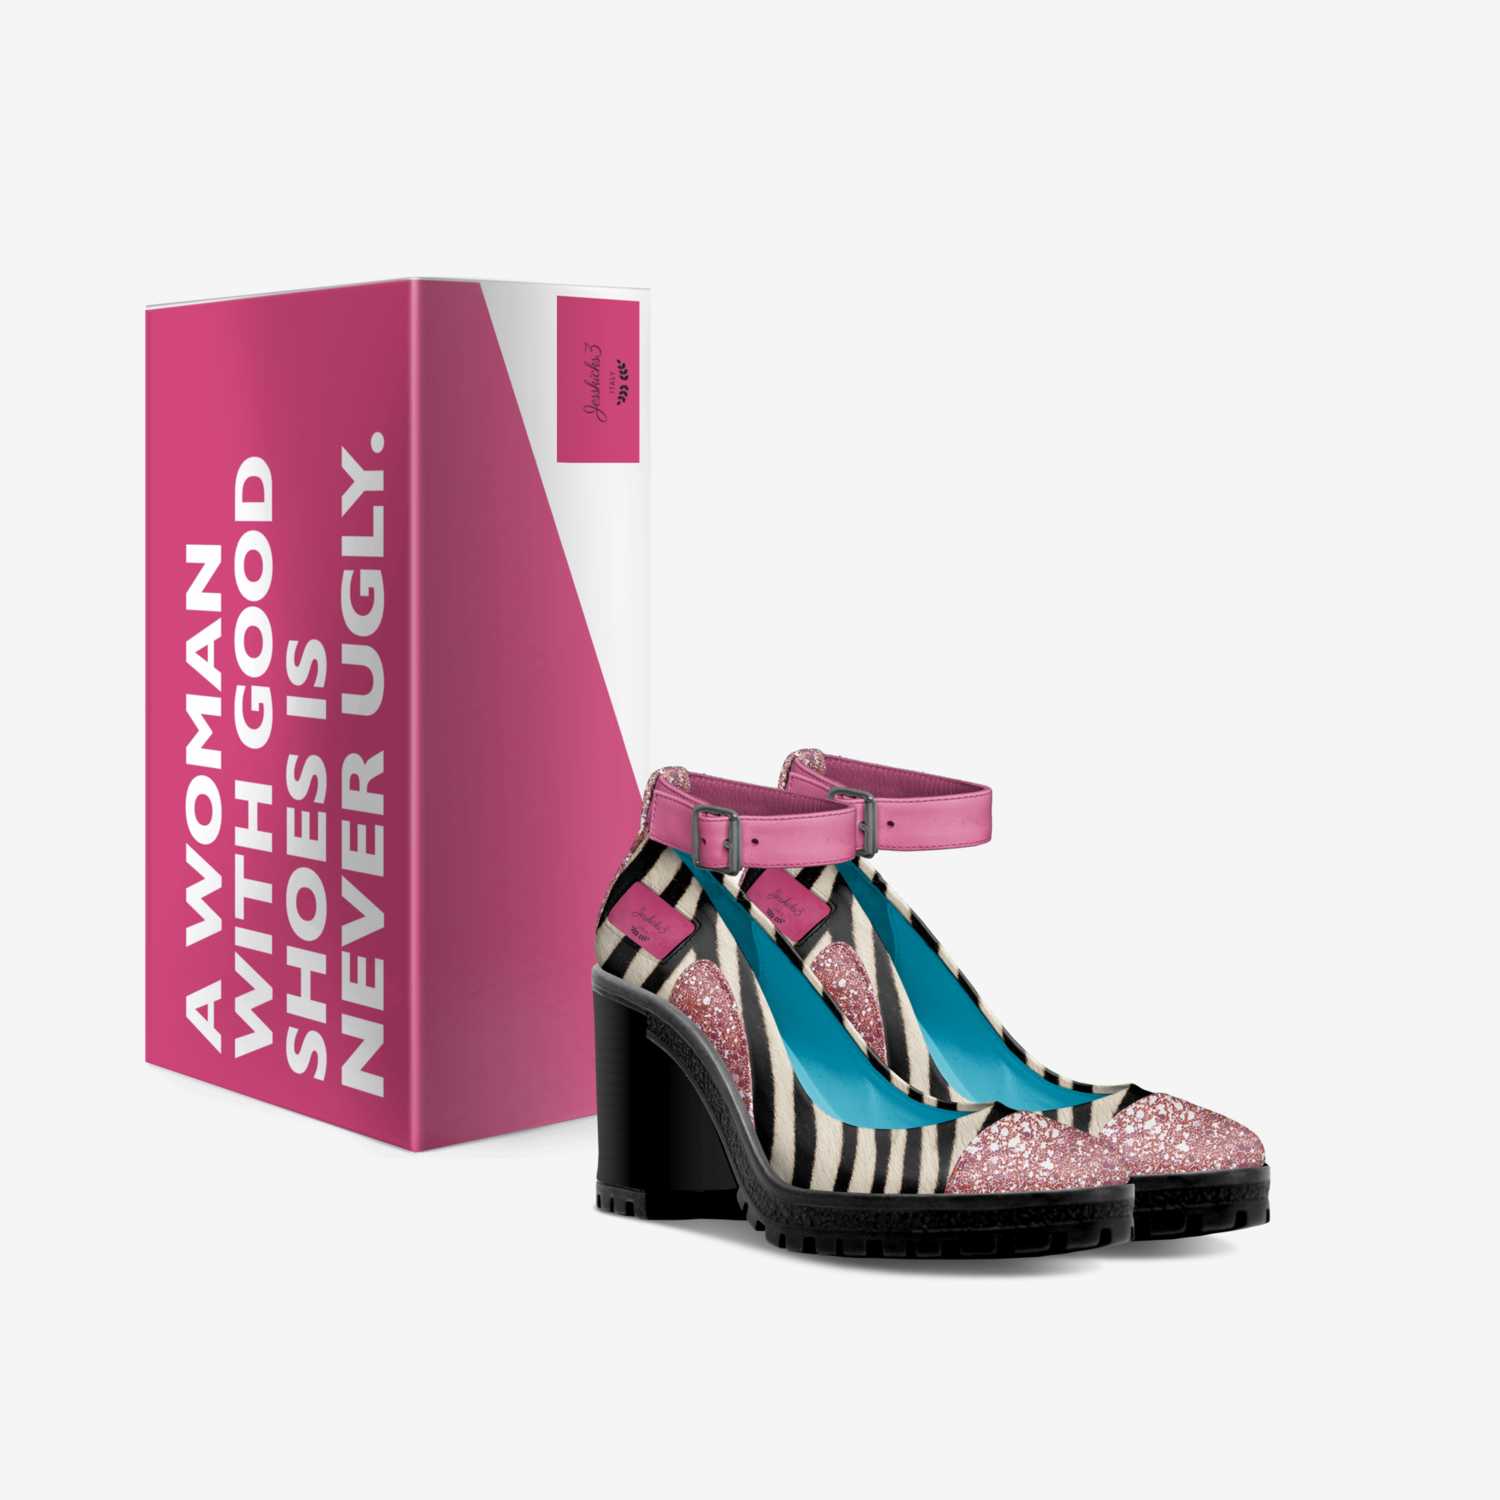 Jesskicks3 custom made in Italy shoes by Jessica Burton | Box view